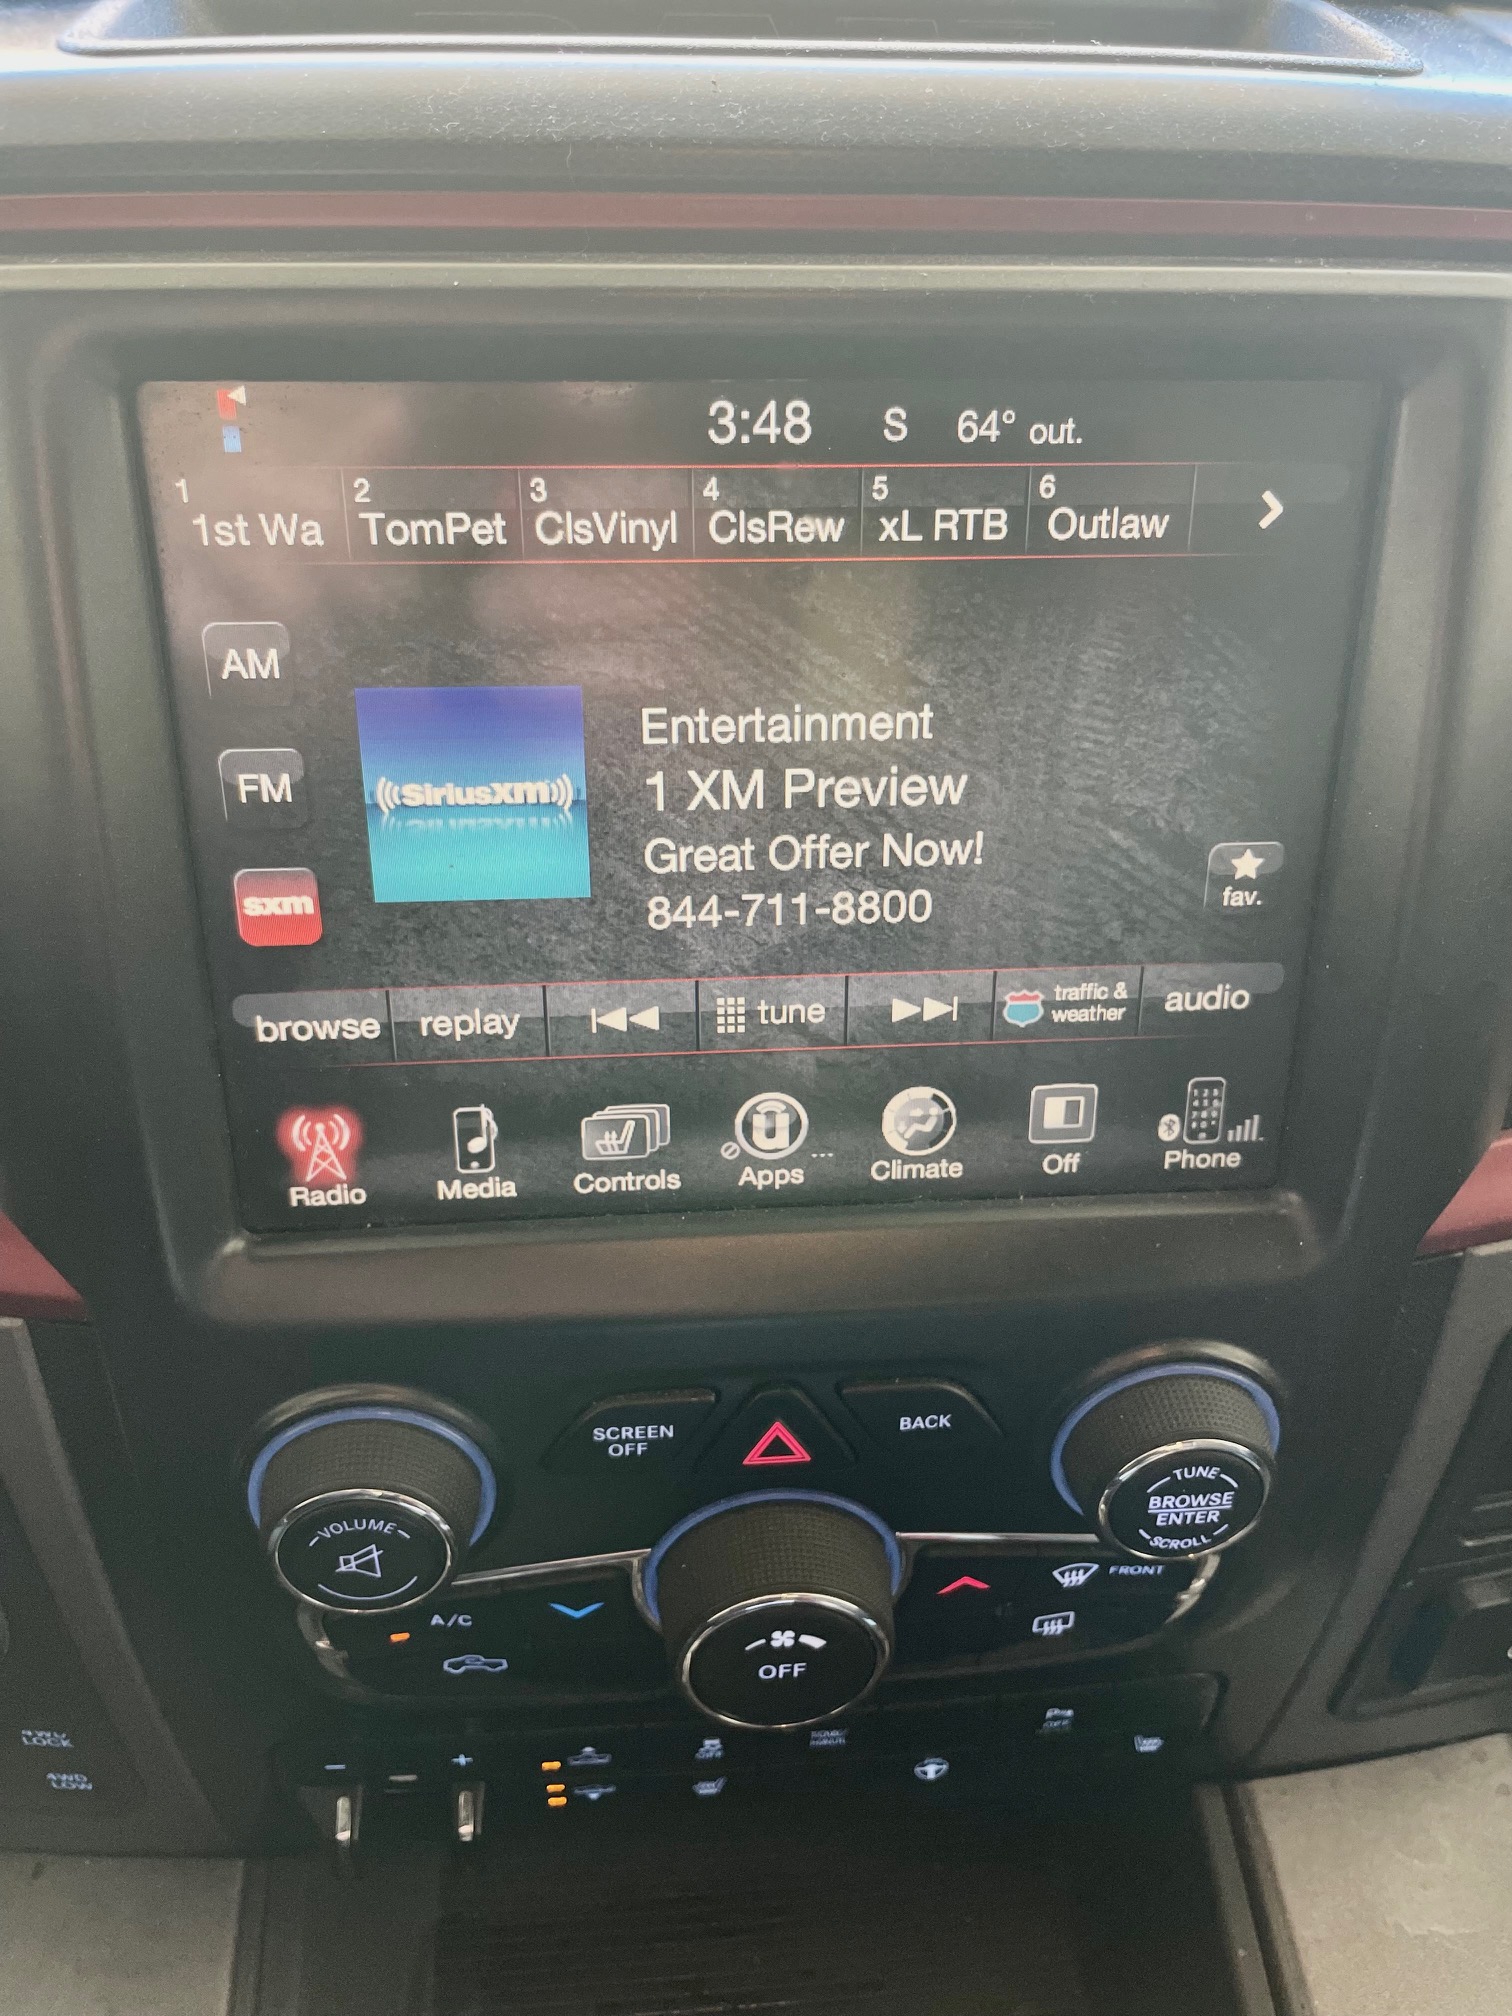 The Sirius Radio screen in my Ram truck